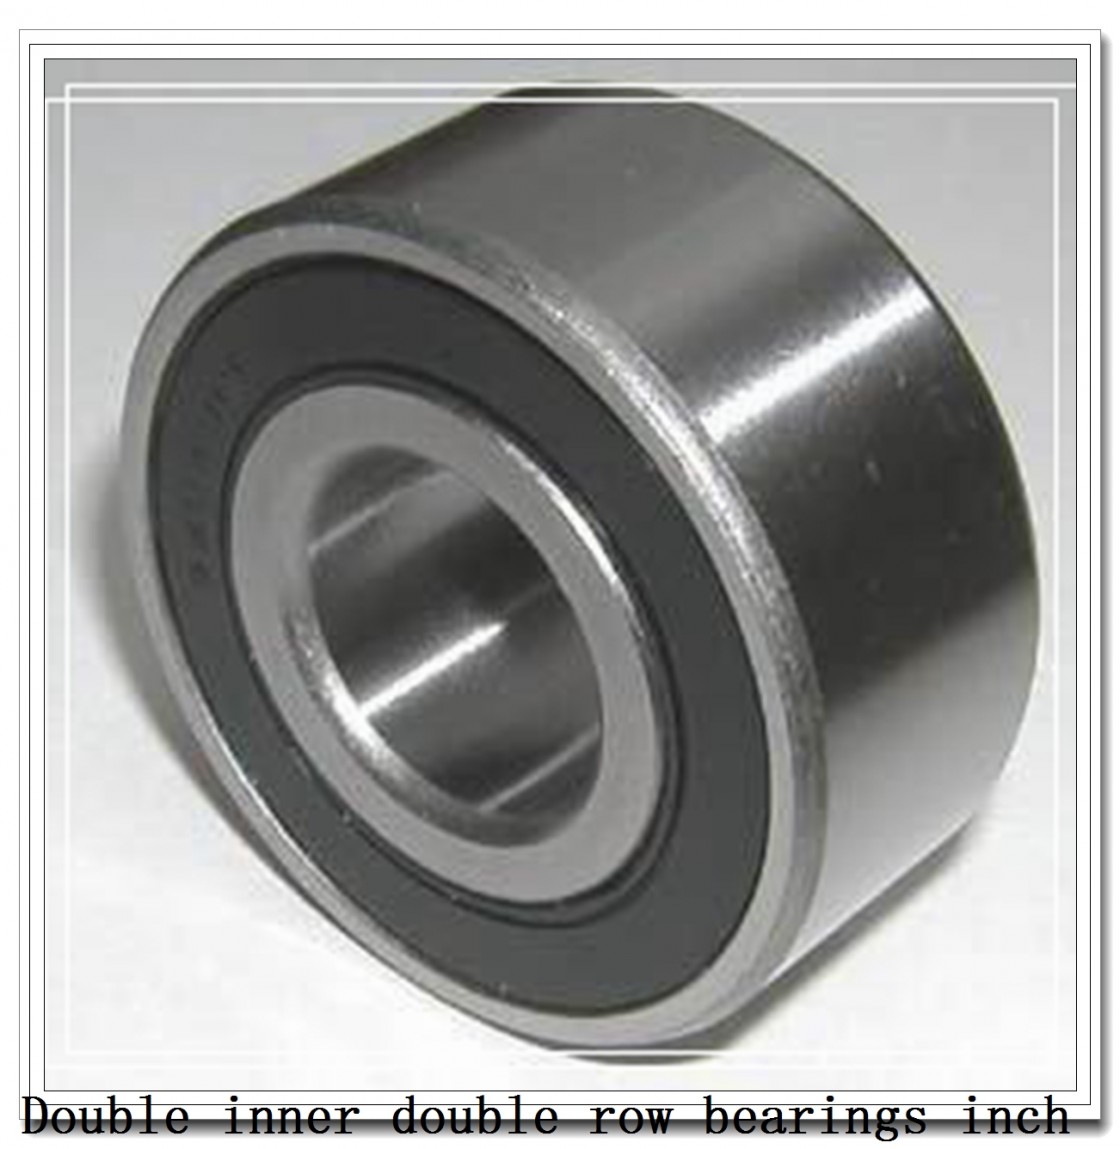 EE542215/542291D Double inner double row bearings inch